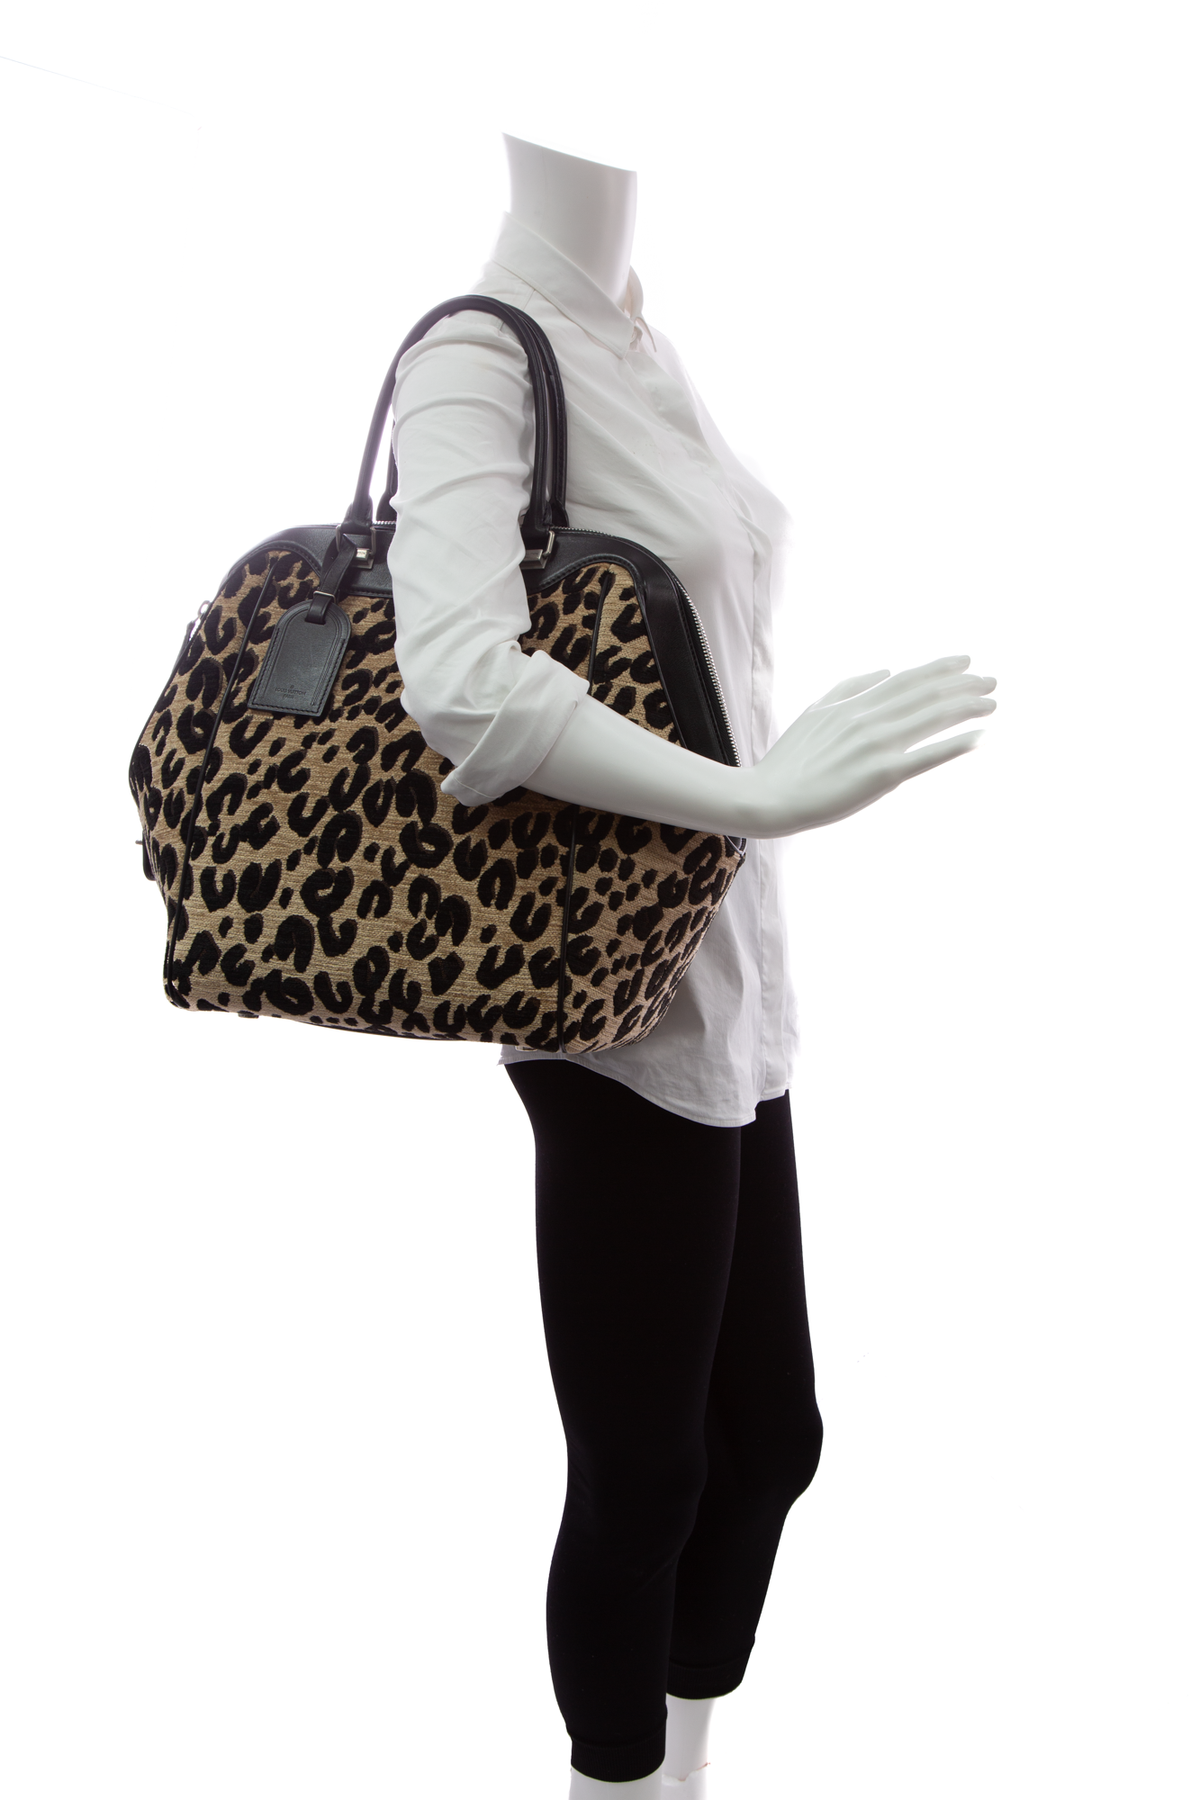 Louis Vuitton Leopard Bags & Handbags for Women, Authenticity Guaranteed